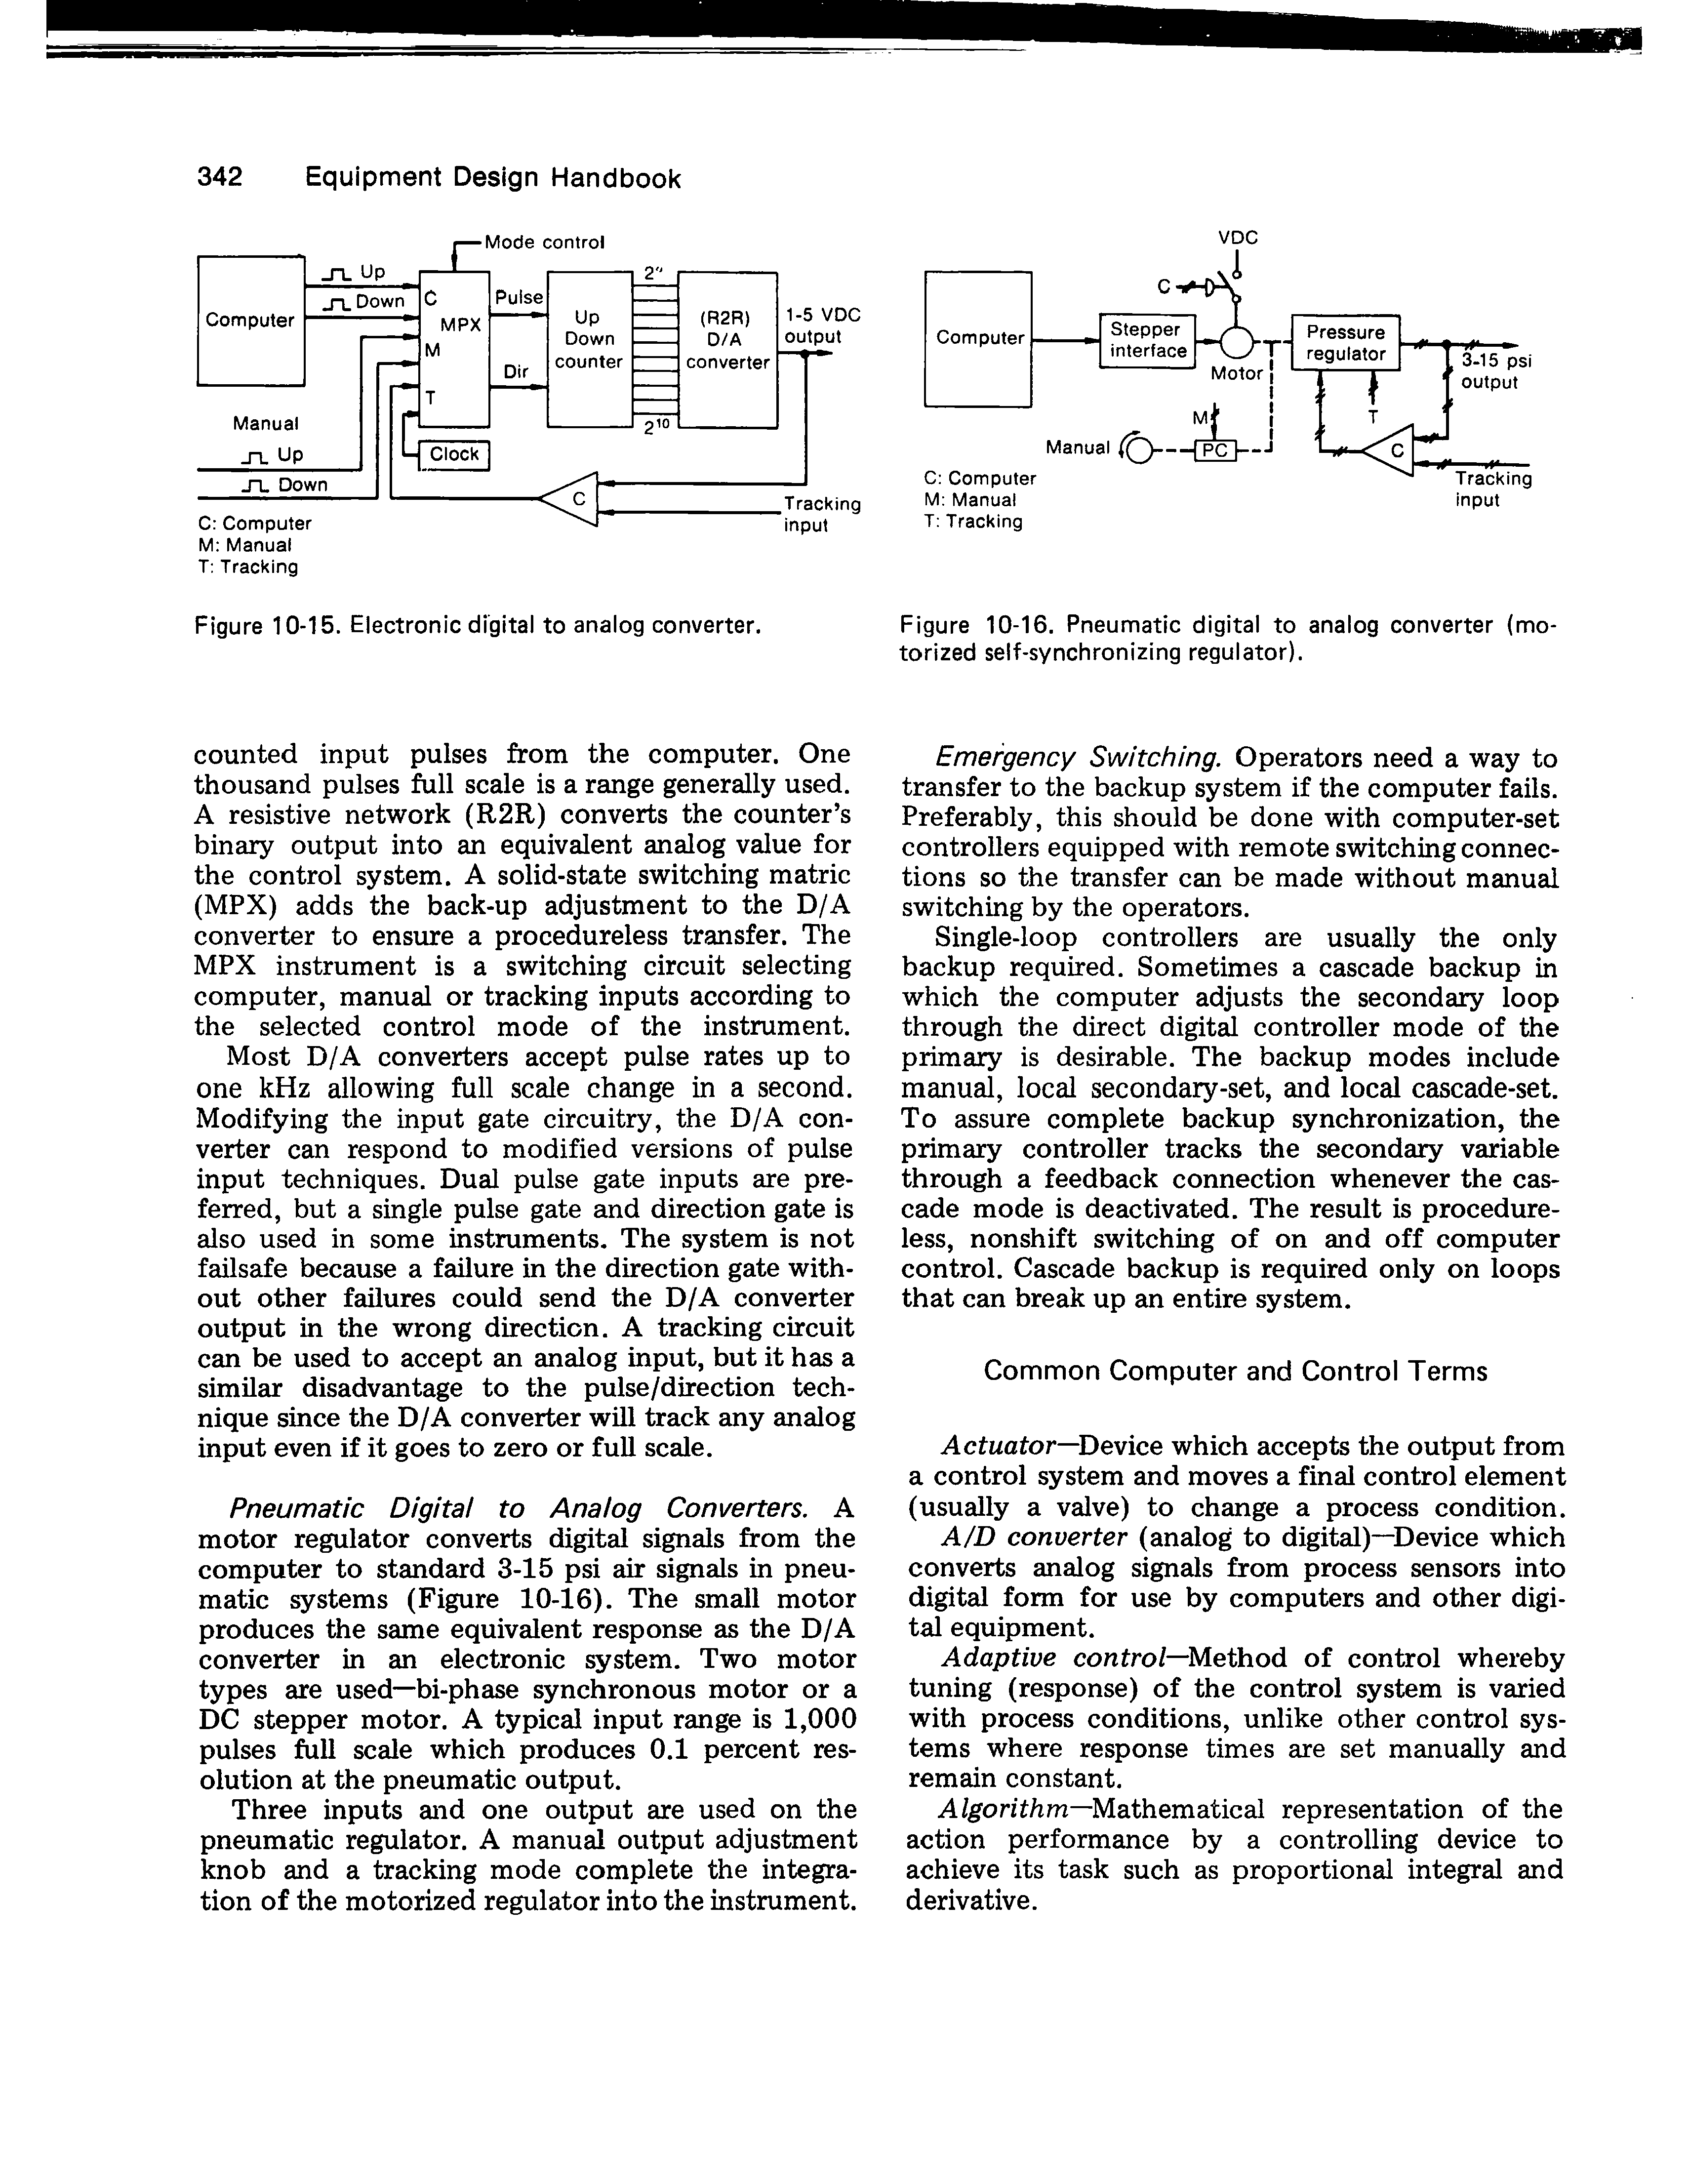 Figure 10-16. Pneumatic digital to analog converter (motorized self-synchronizing regulator).